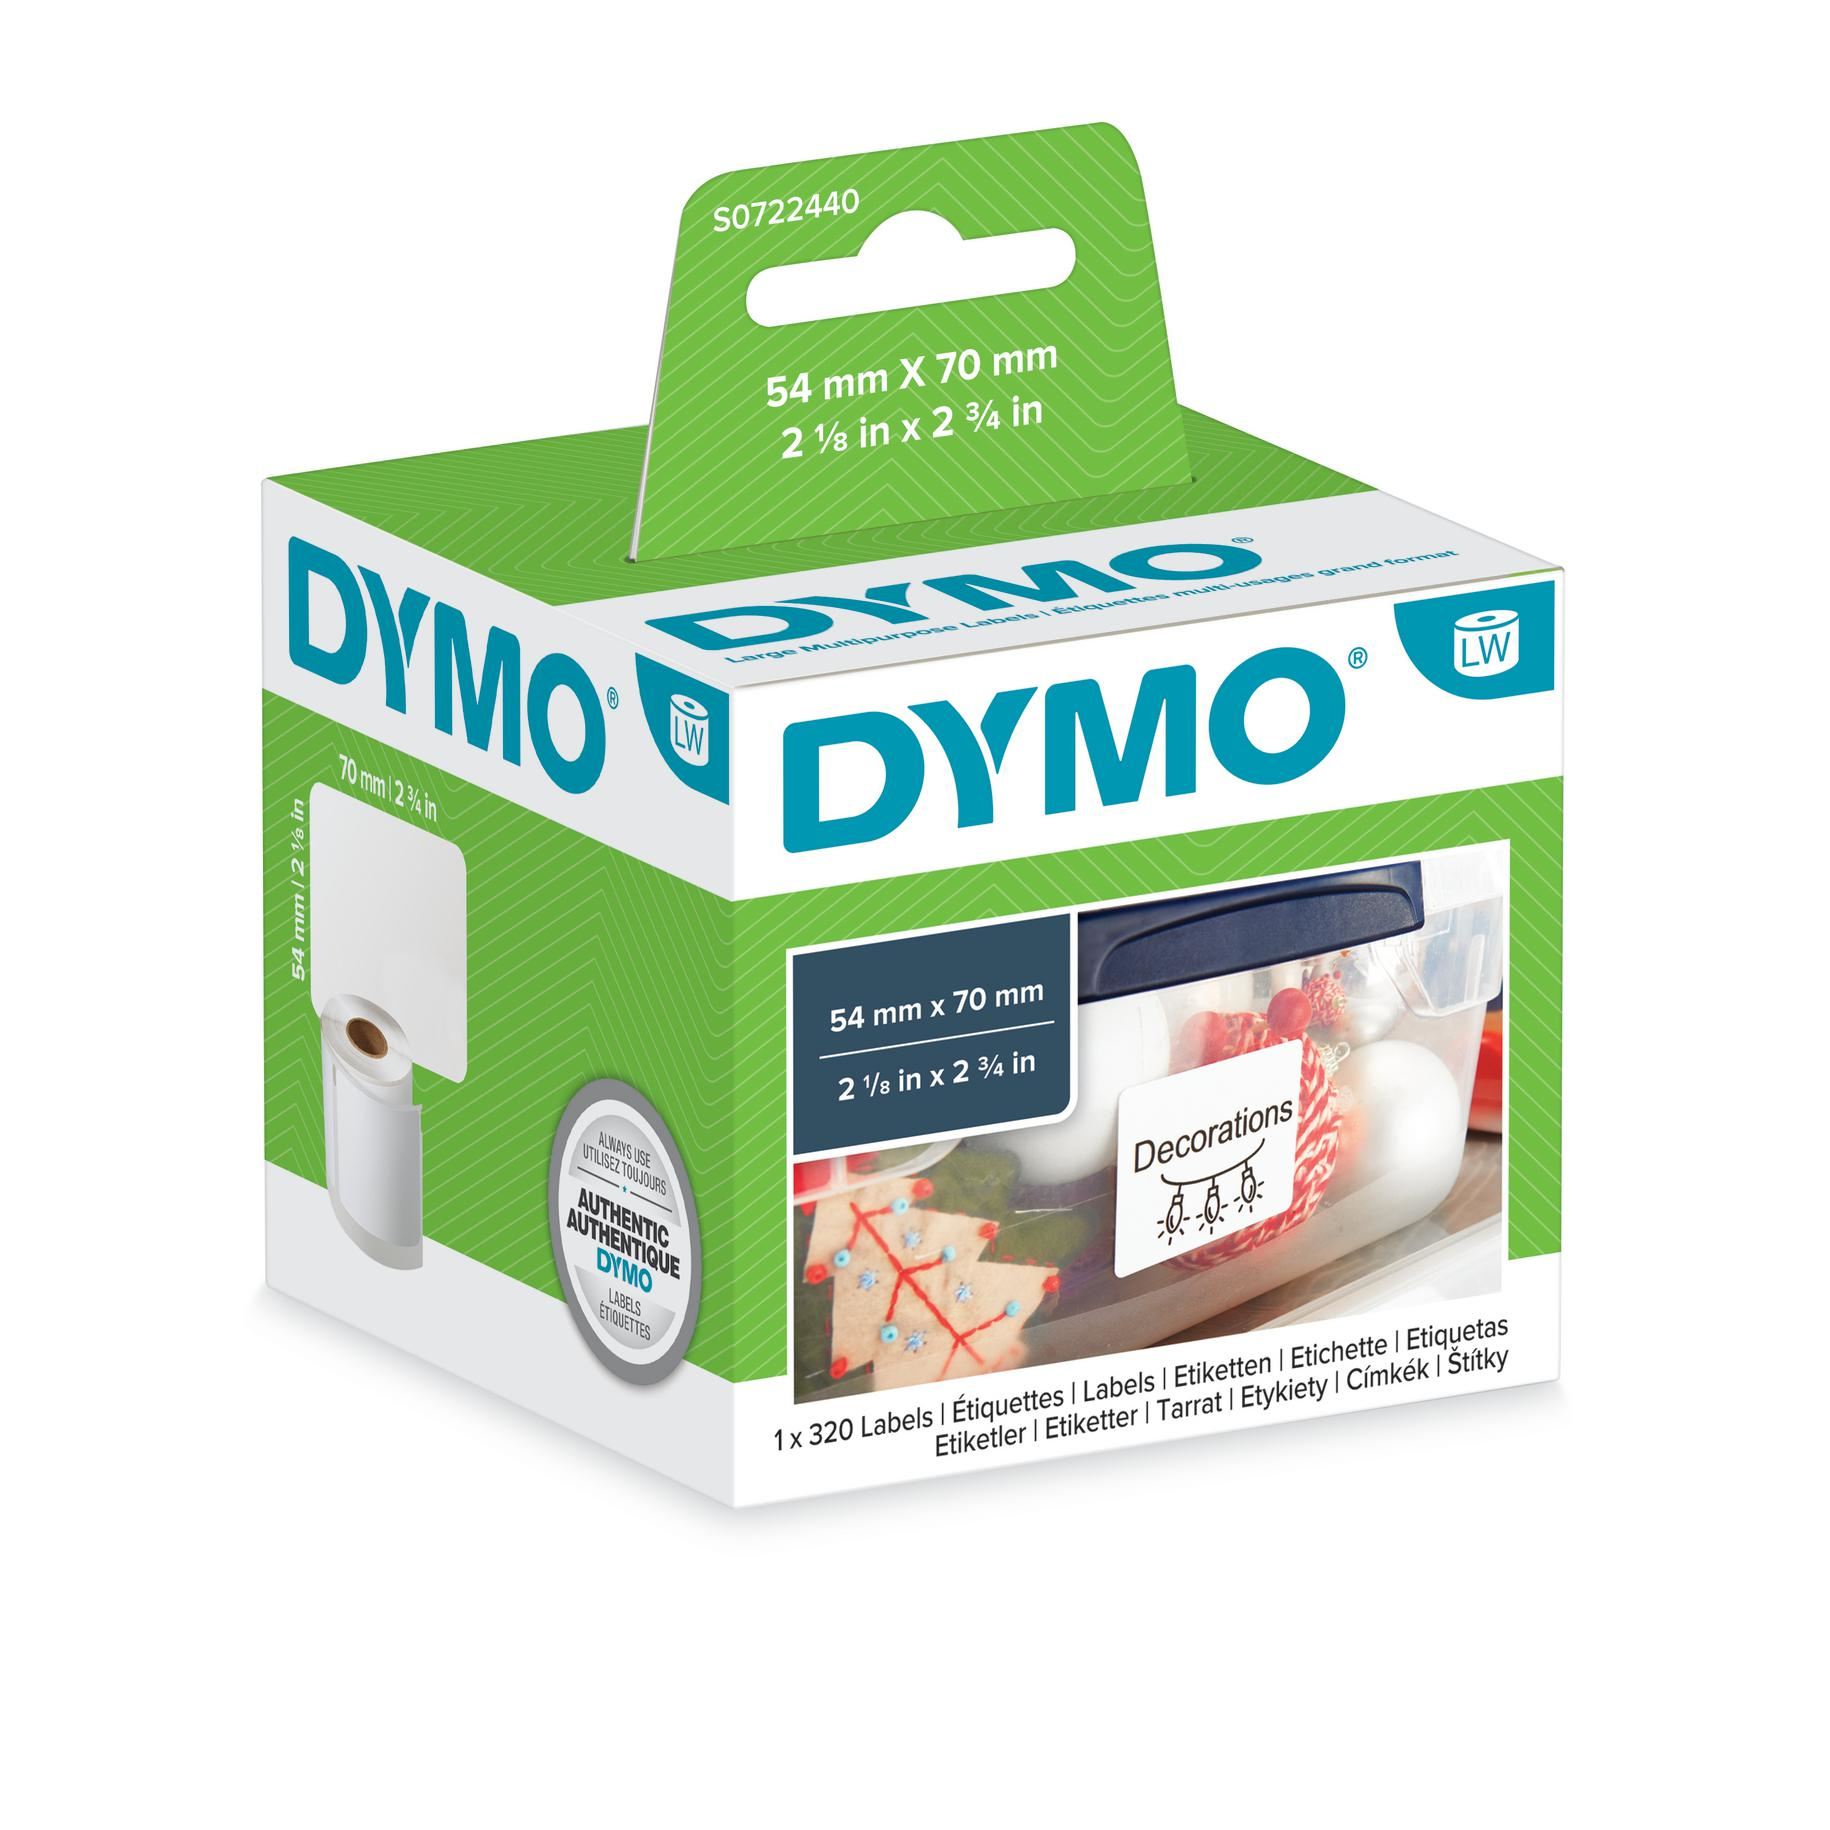 DYMO LW - Universaletiketter - 54 x 70 mm - S0722440